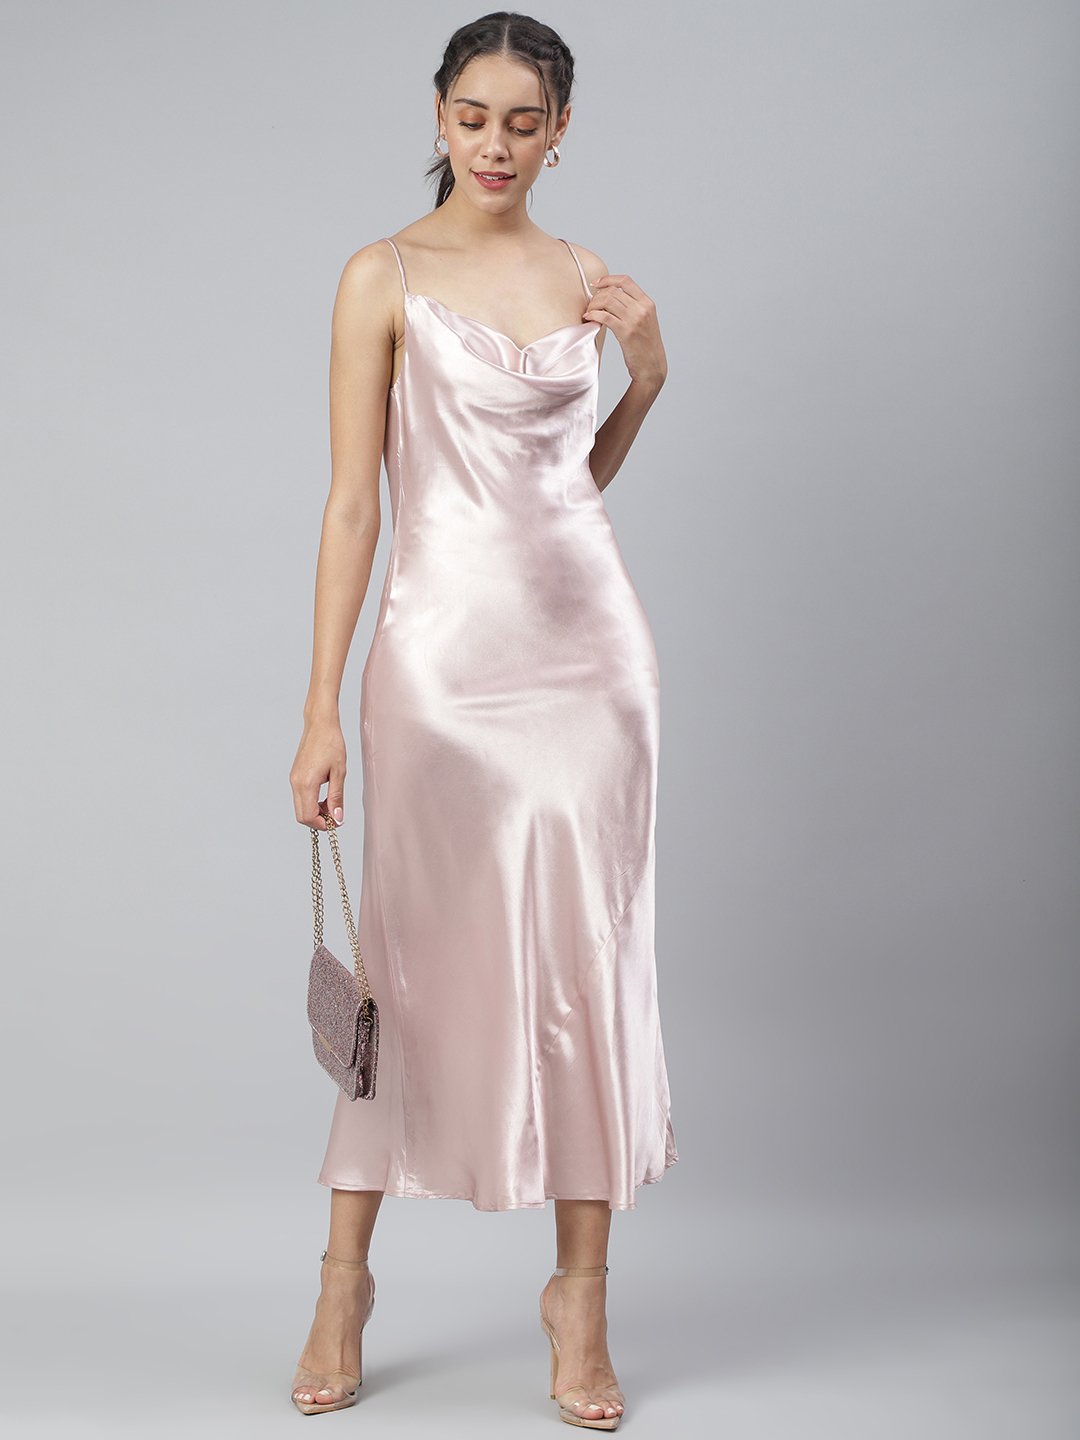 SCORPIUS Pink Satin Cocktail Dress